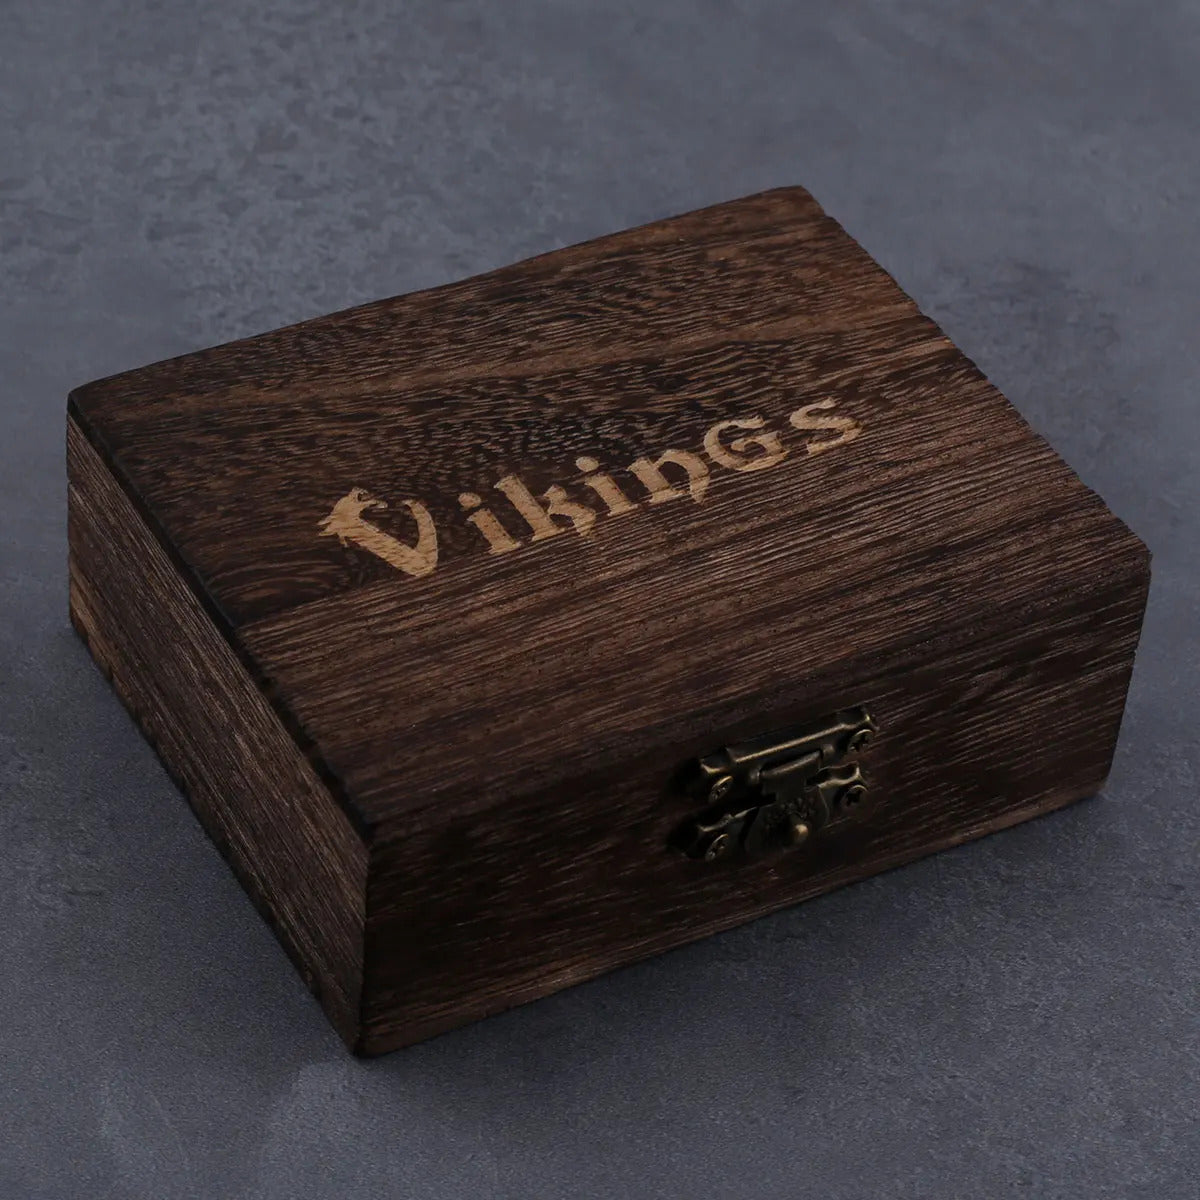 Viking Ship Necklace + Wooden Box